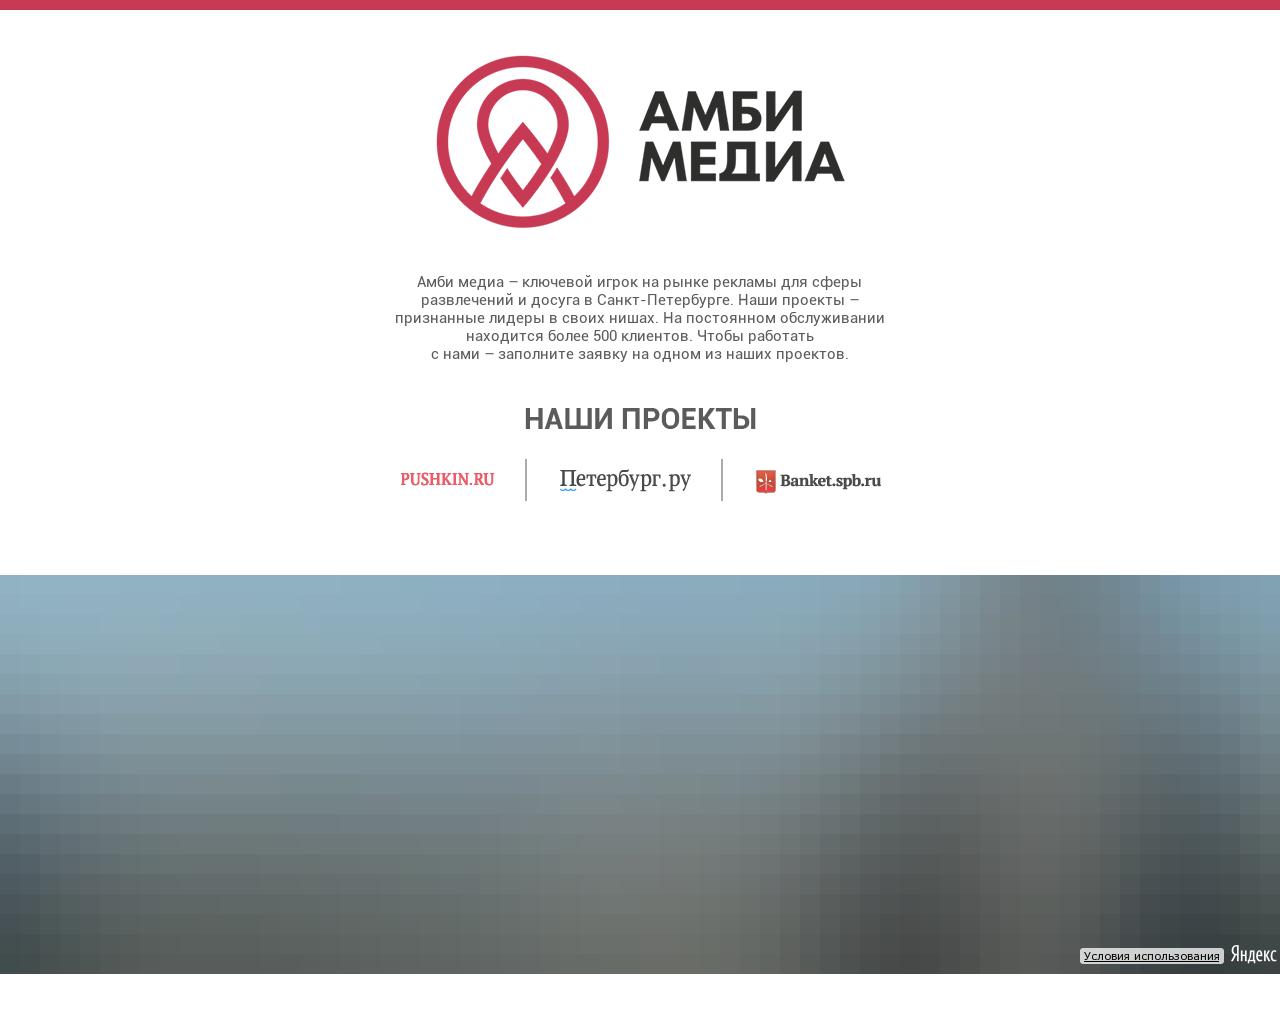 Изображение сайта ambi.ru в разрешении 1280x1024